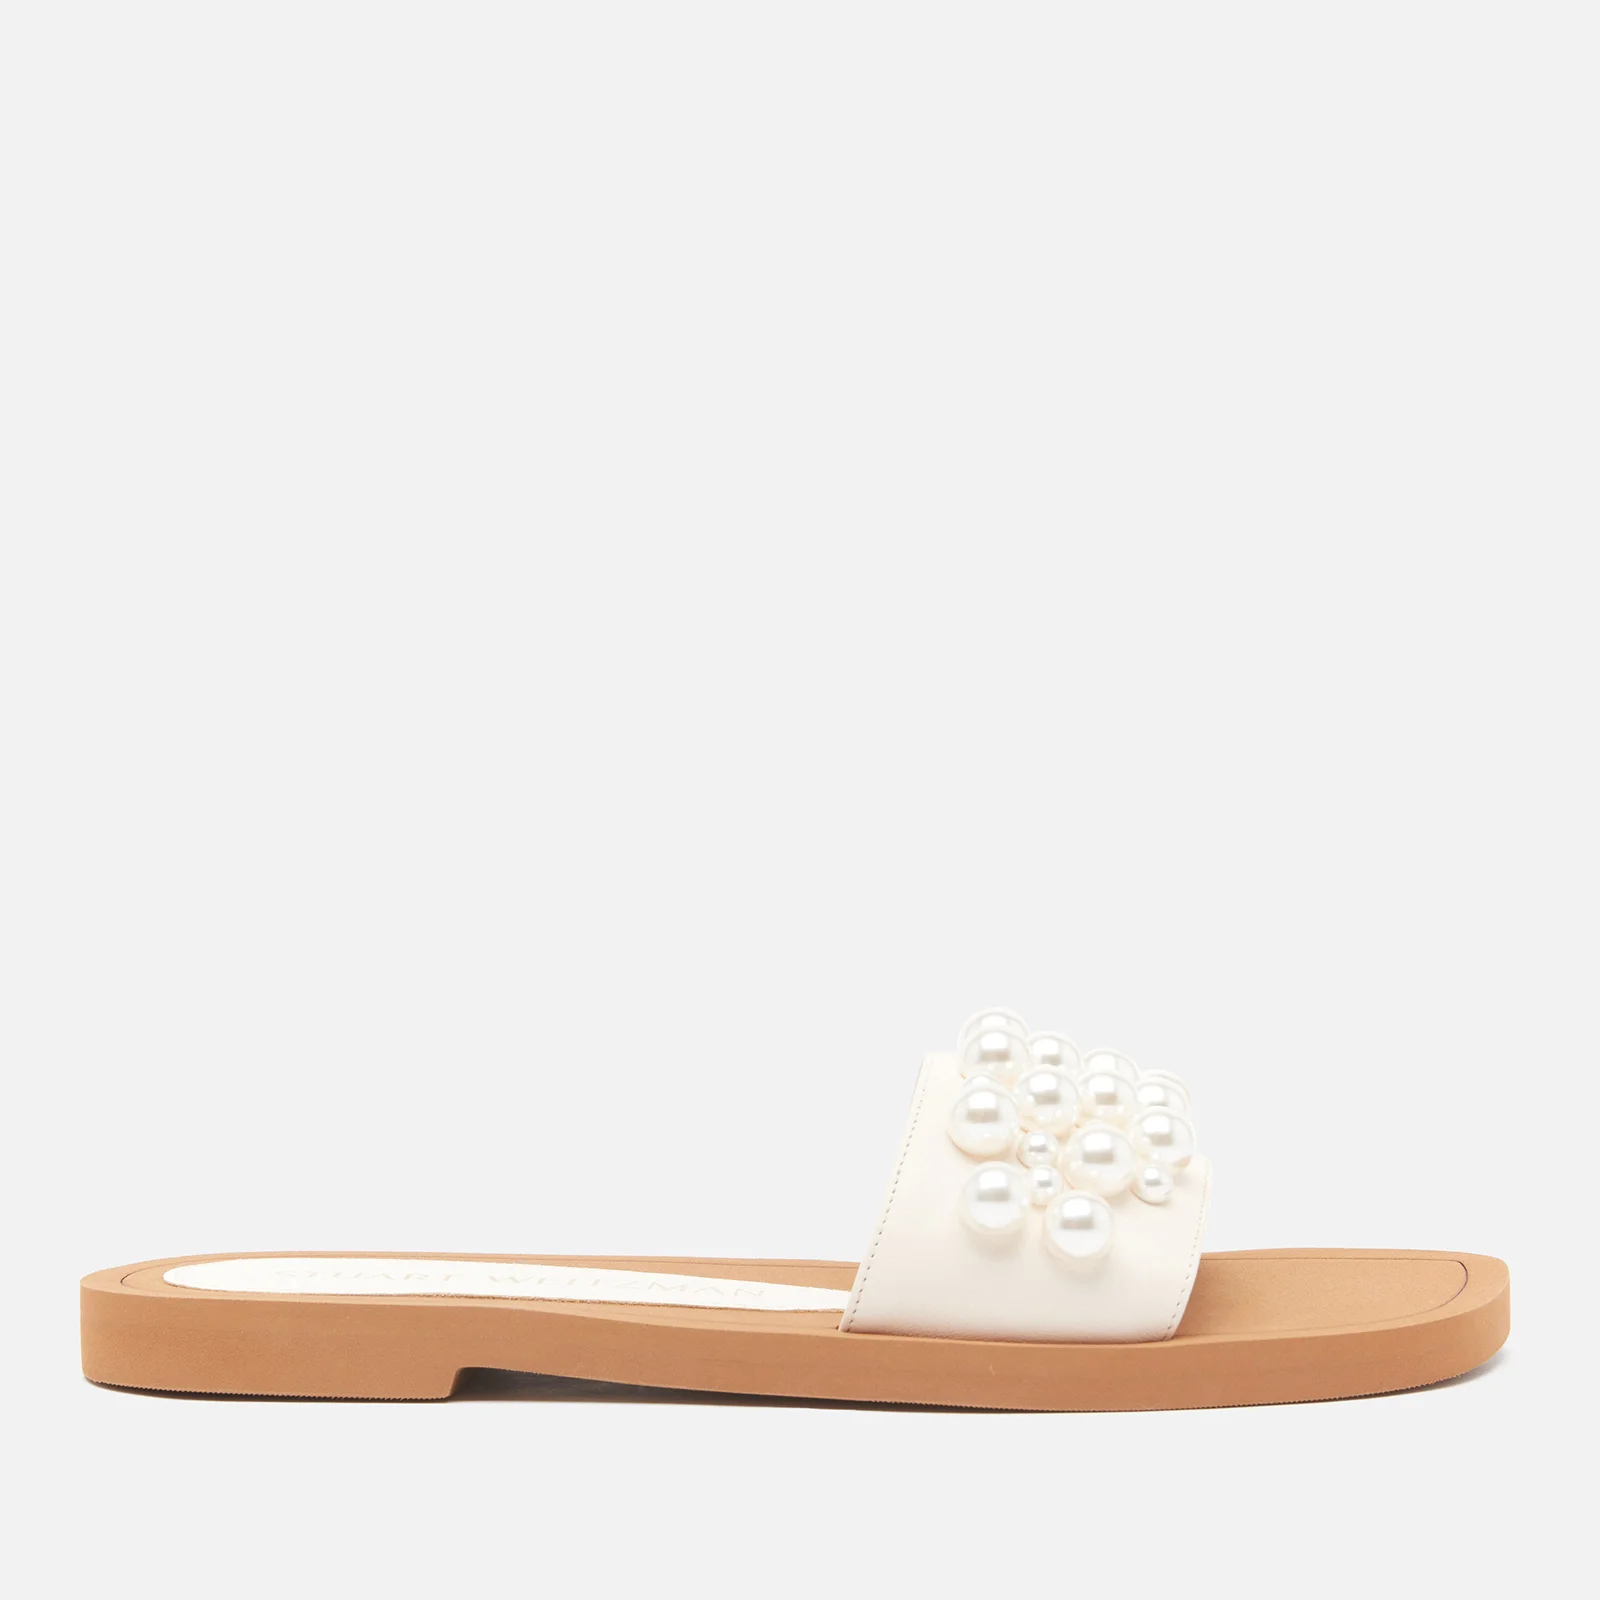 Stuart Weitzman Women's Goldie Leather Slide Sandals - Seashell Image 1